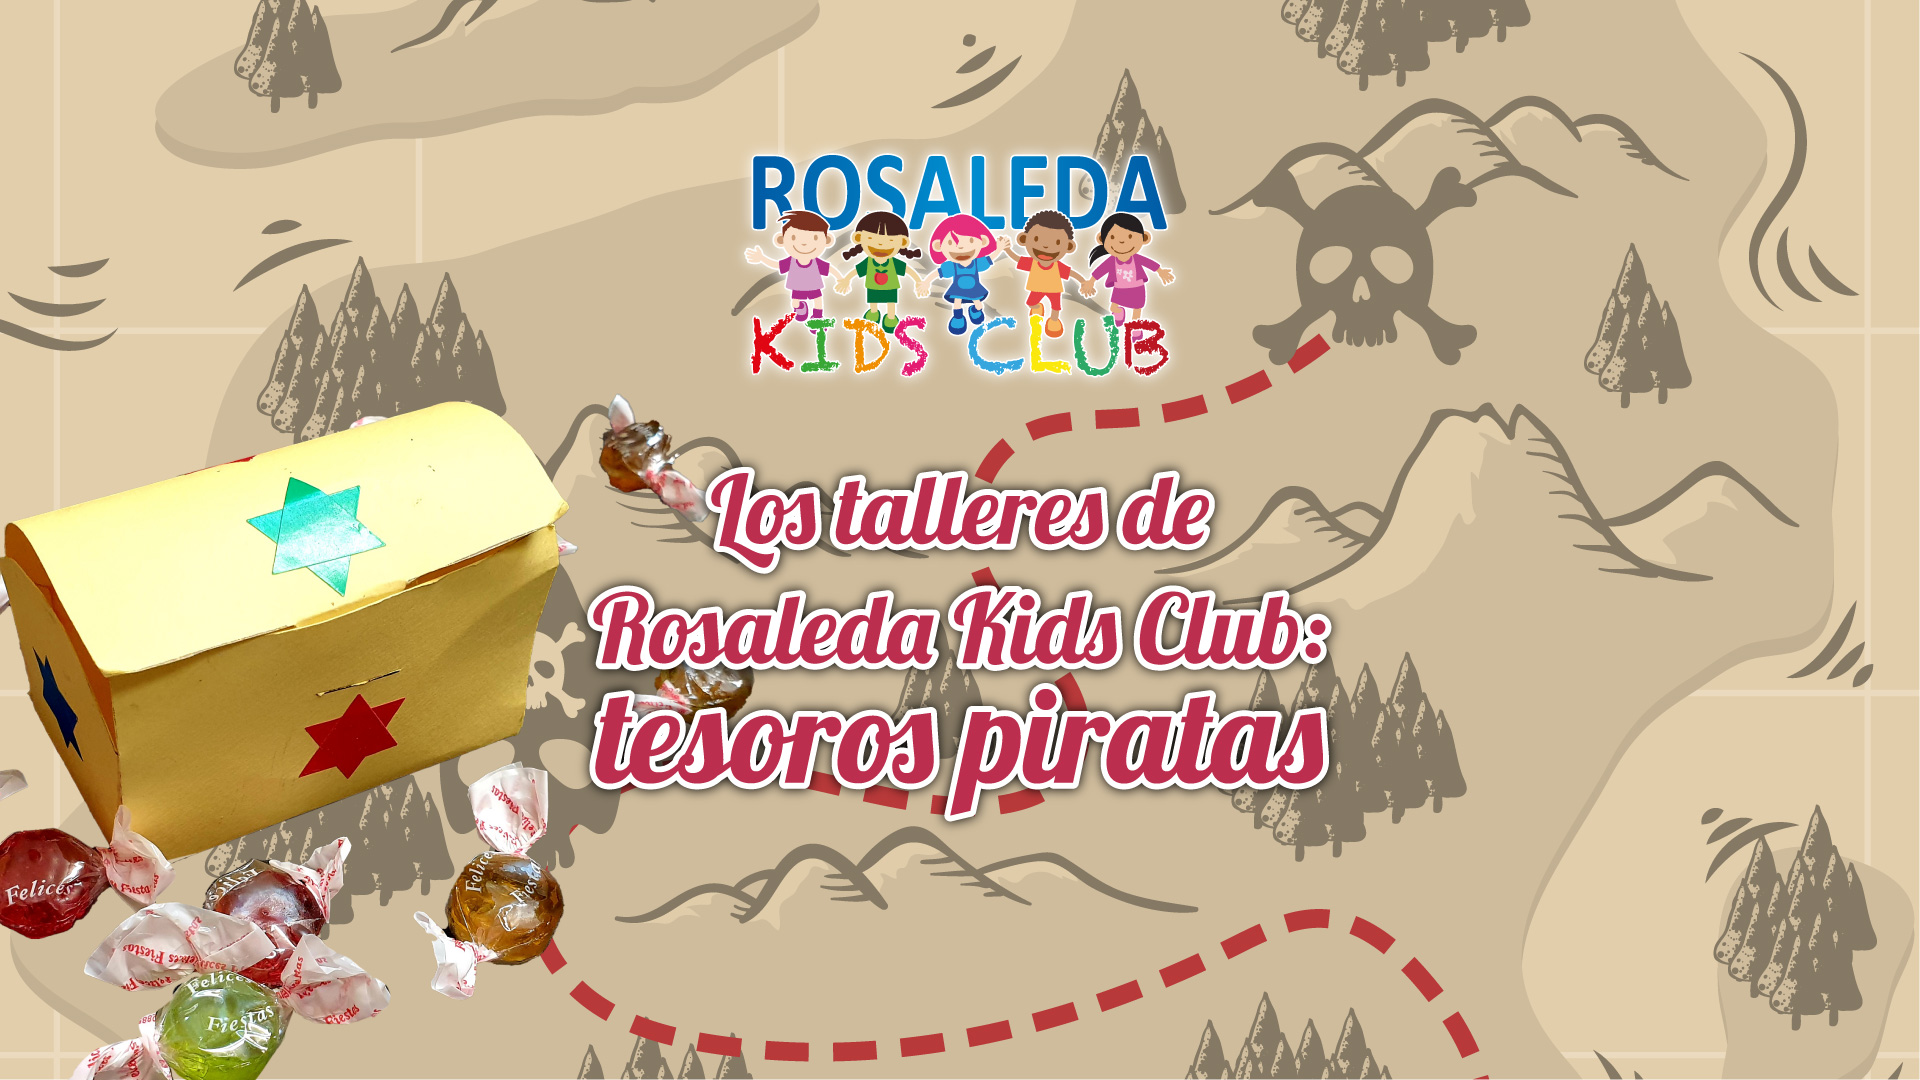 Los talleres de Rosaleda Kids Club: tesoro pirata